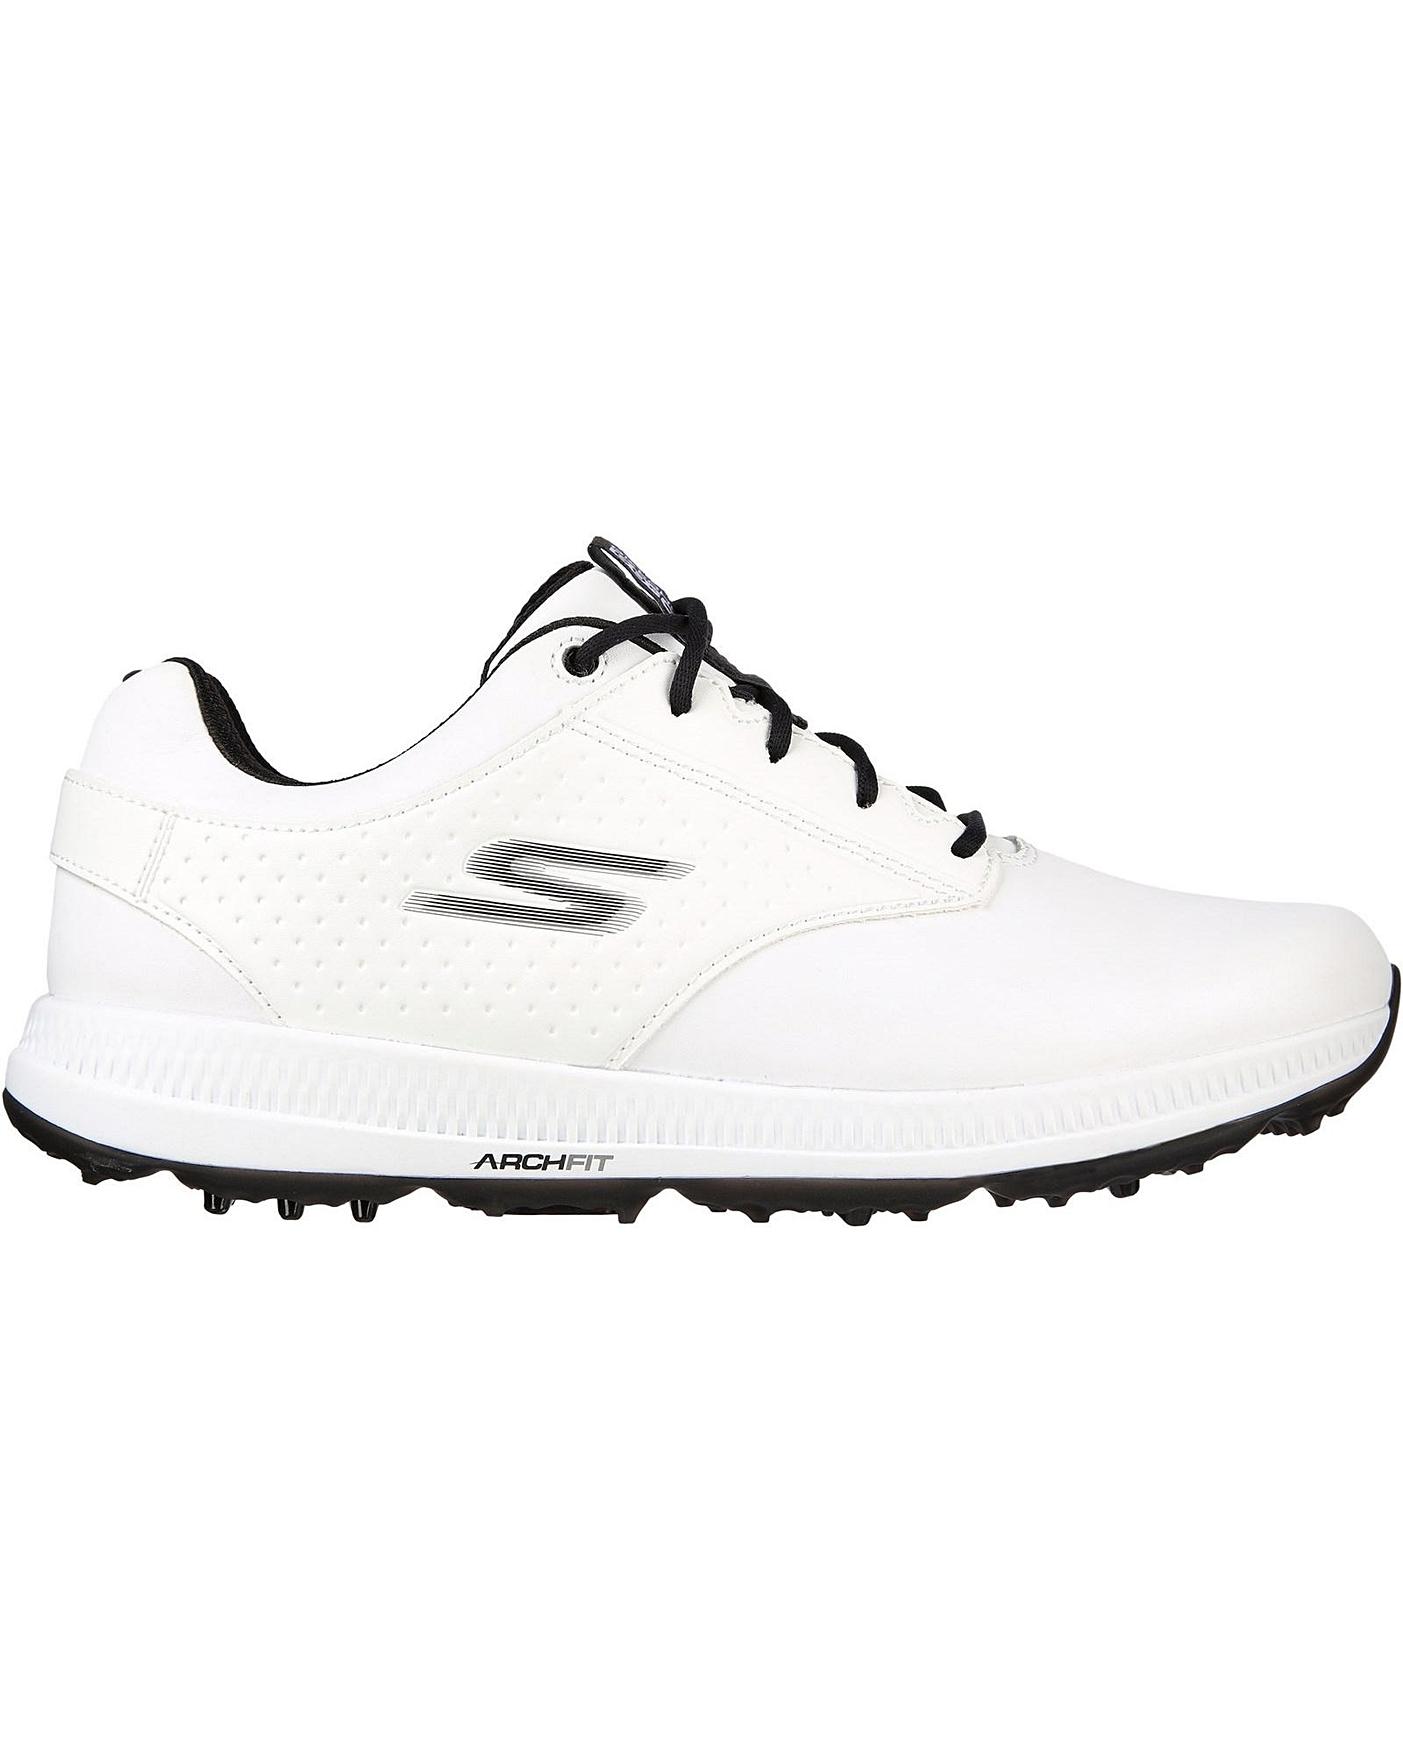 Go Elite 5 Legend Golf Shoes